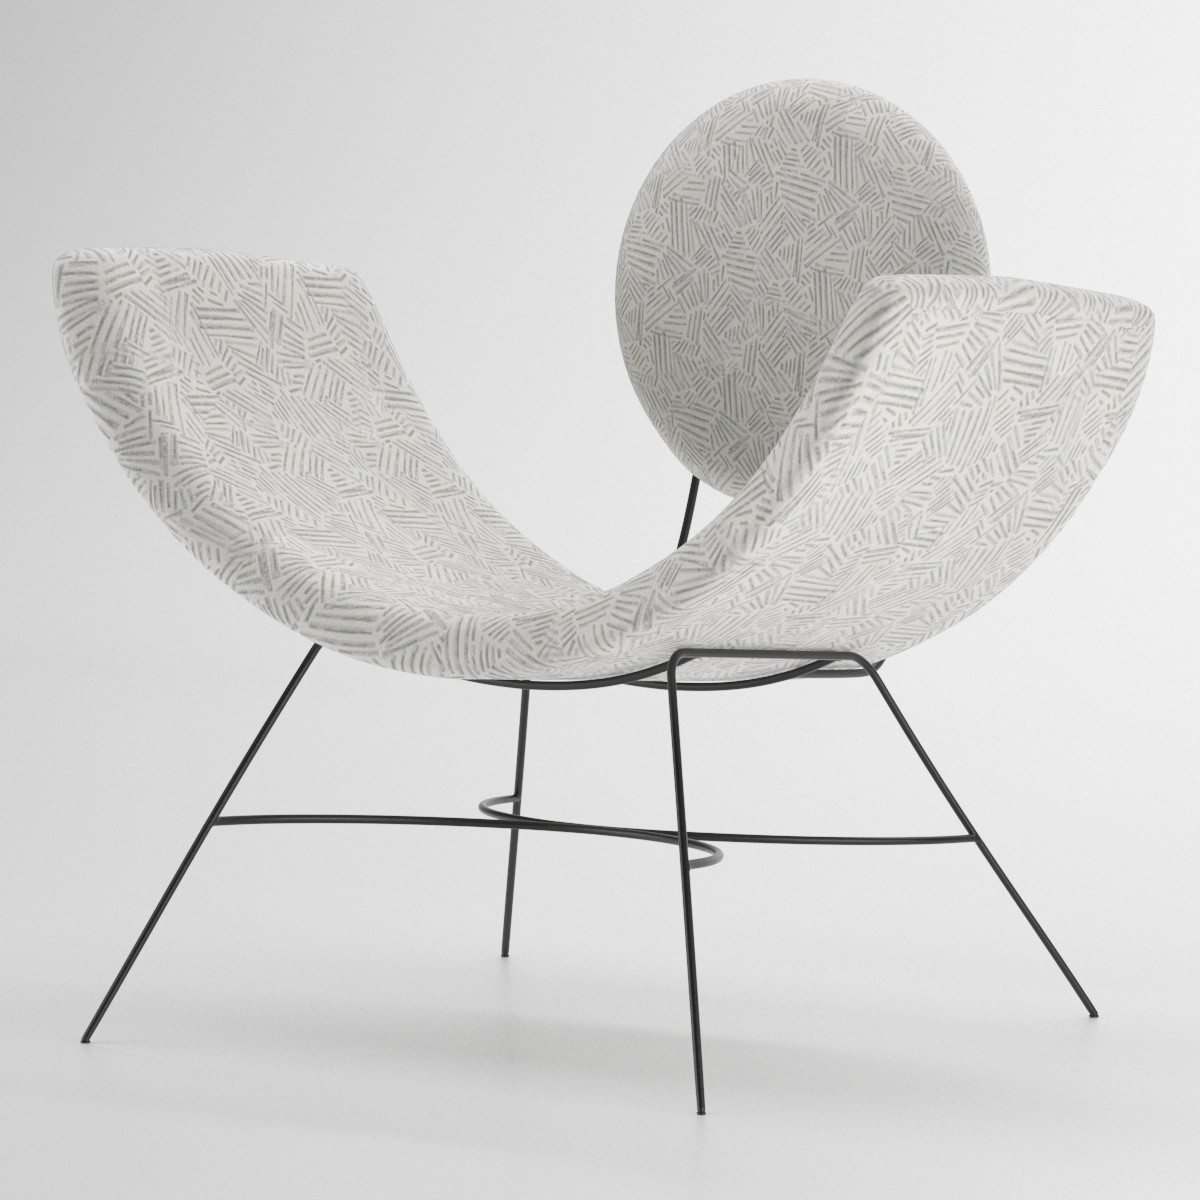 Belt Chair By Atelier Oï - Art of Living - Home